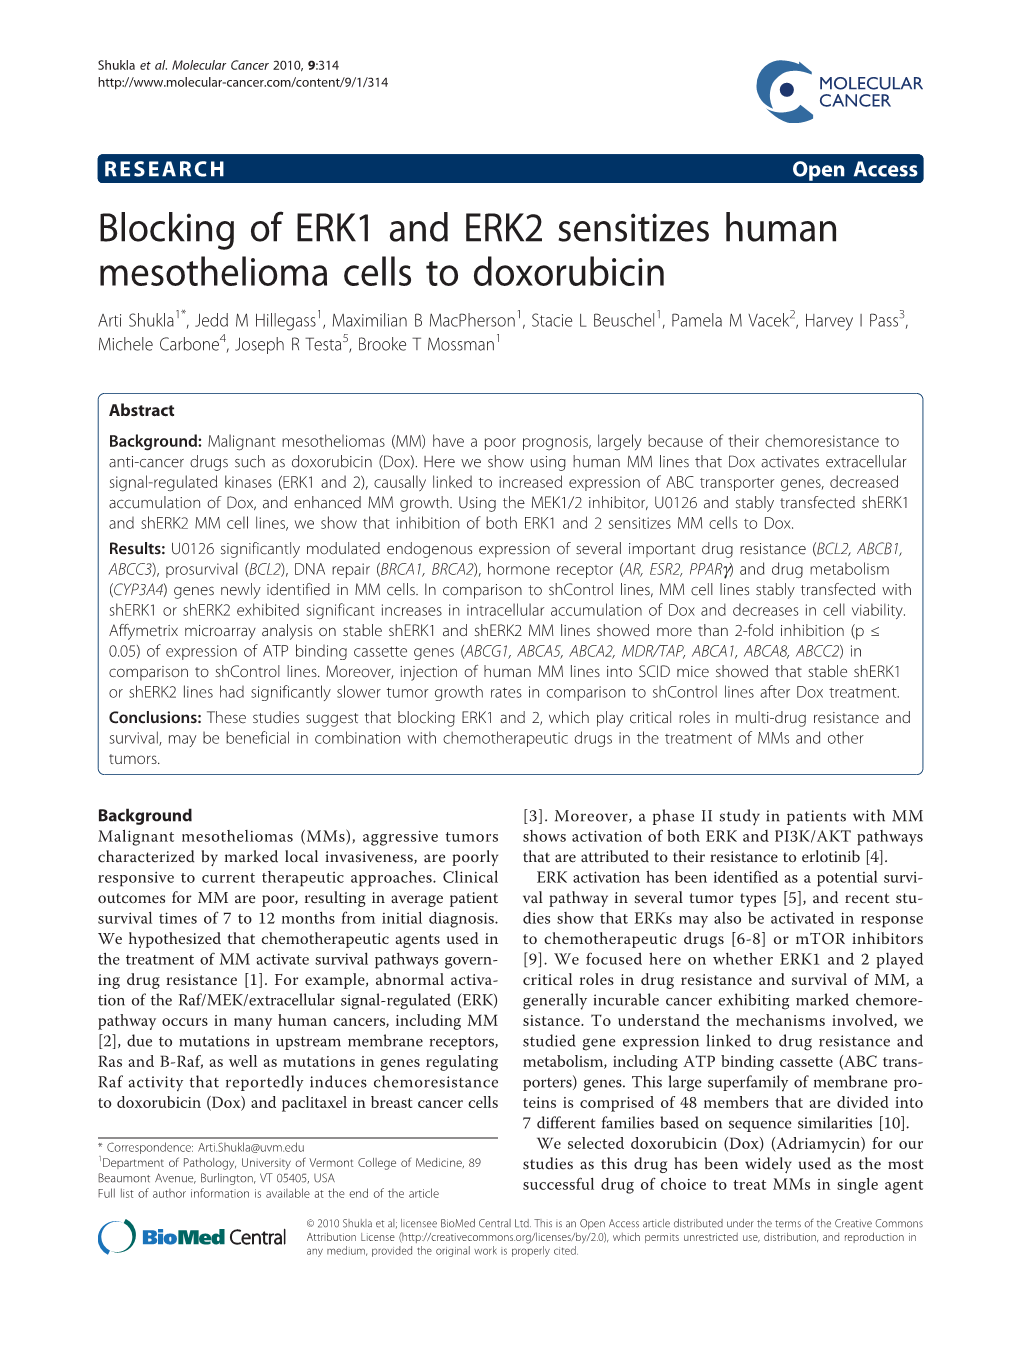 Blocking of ERK1 and ERK2 Sensitizes Human Mesothelioma Cells to Doxorubicin